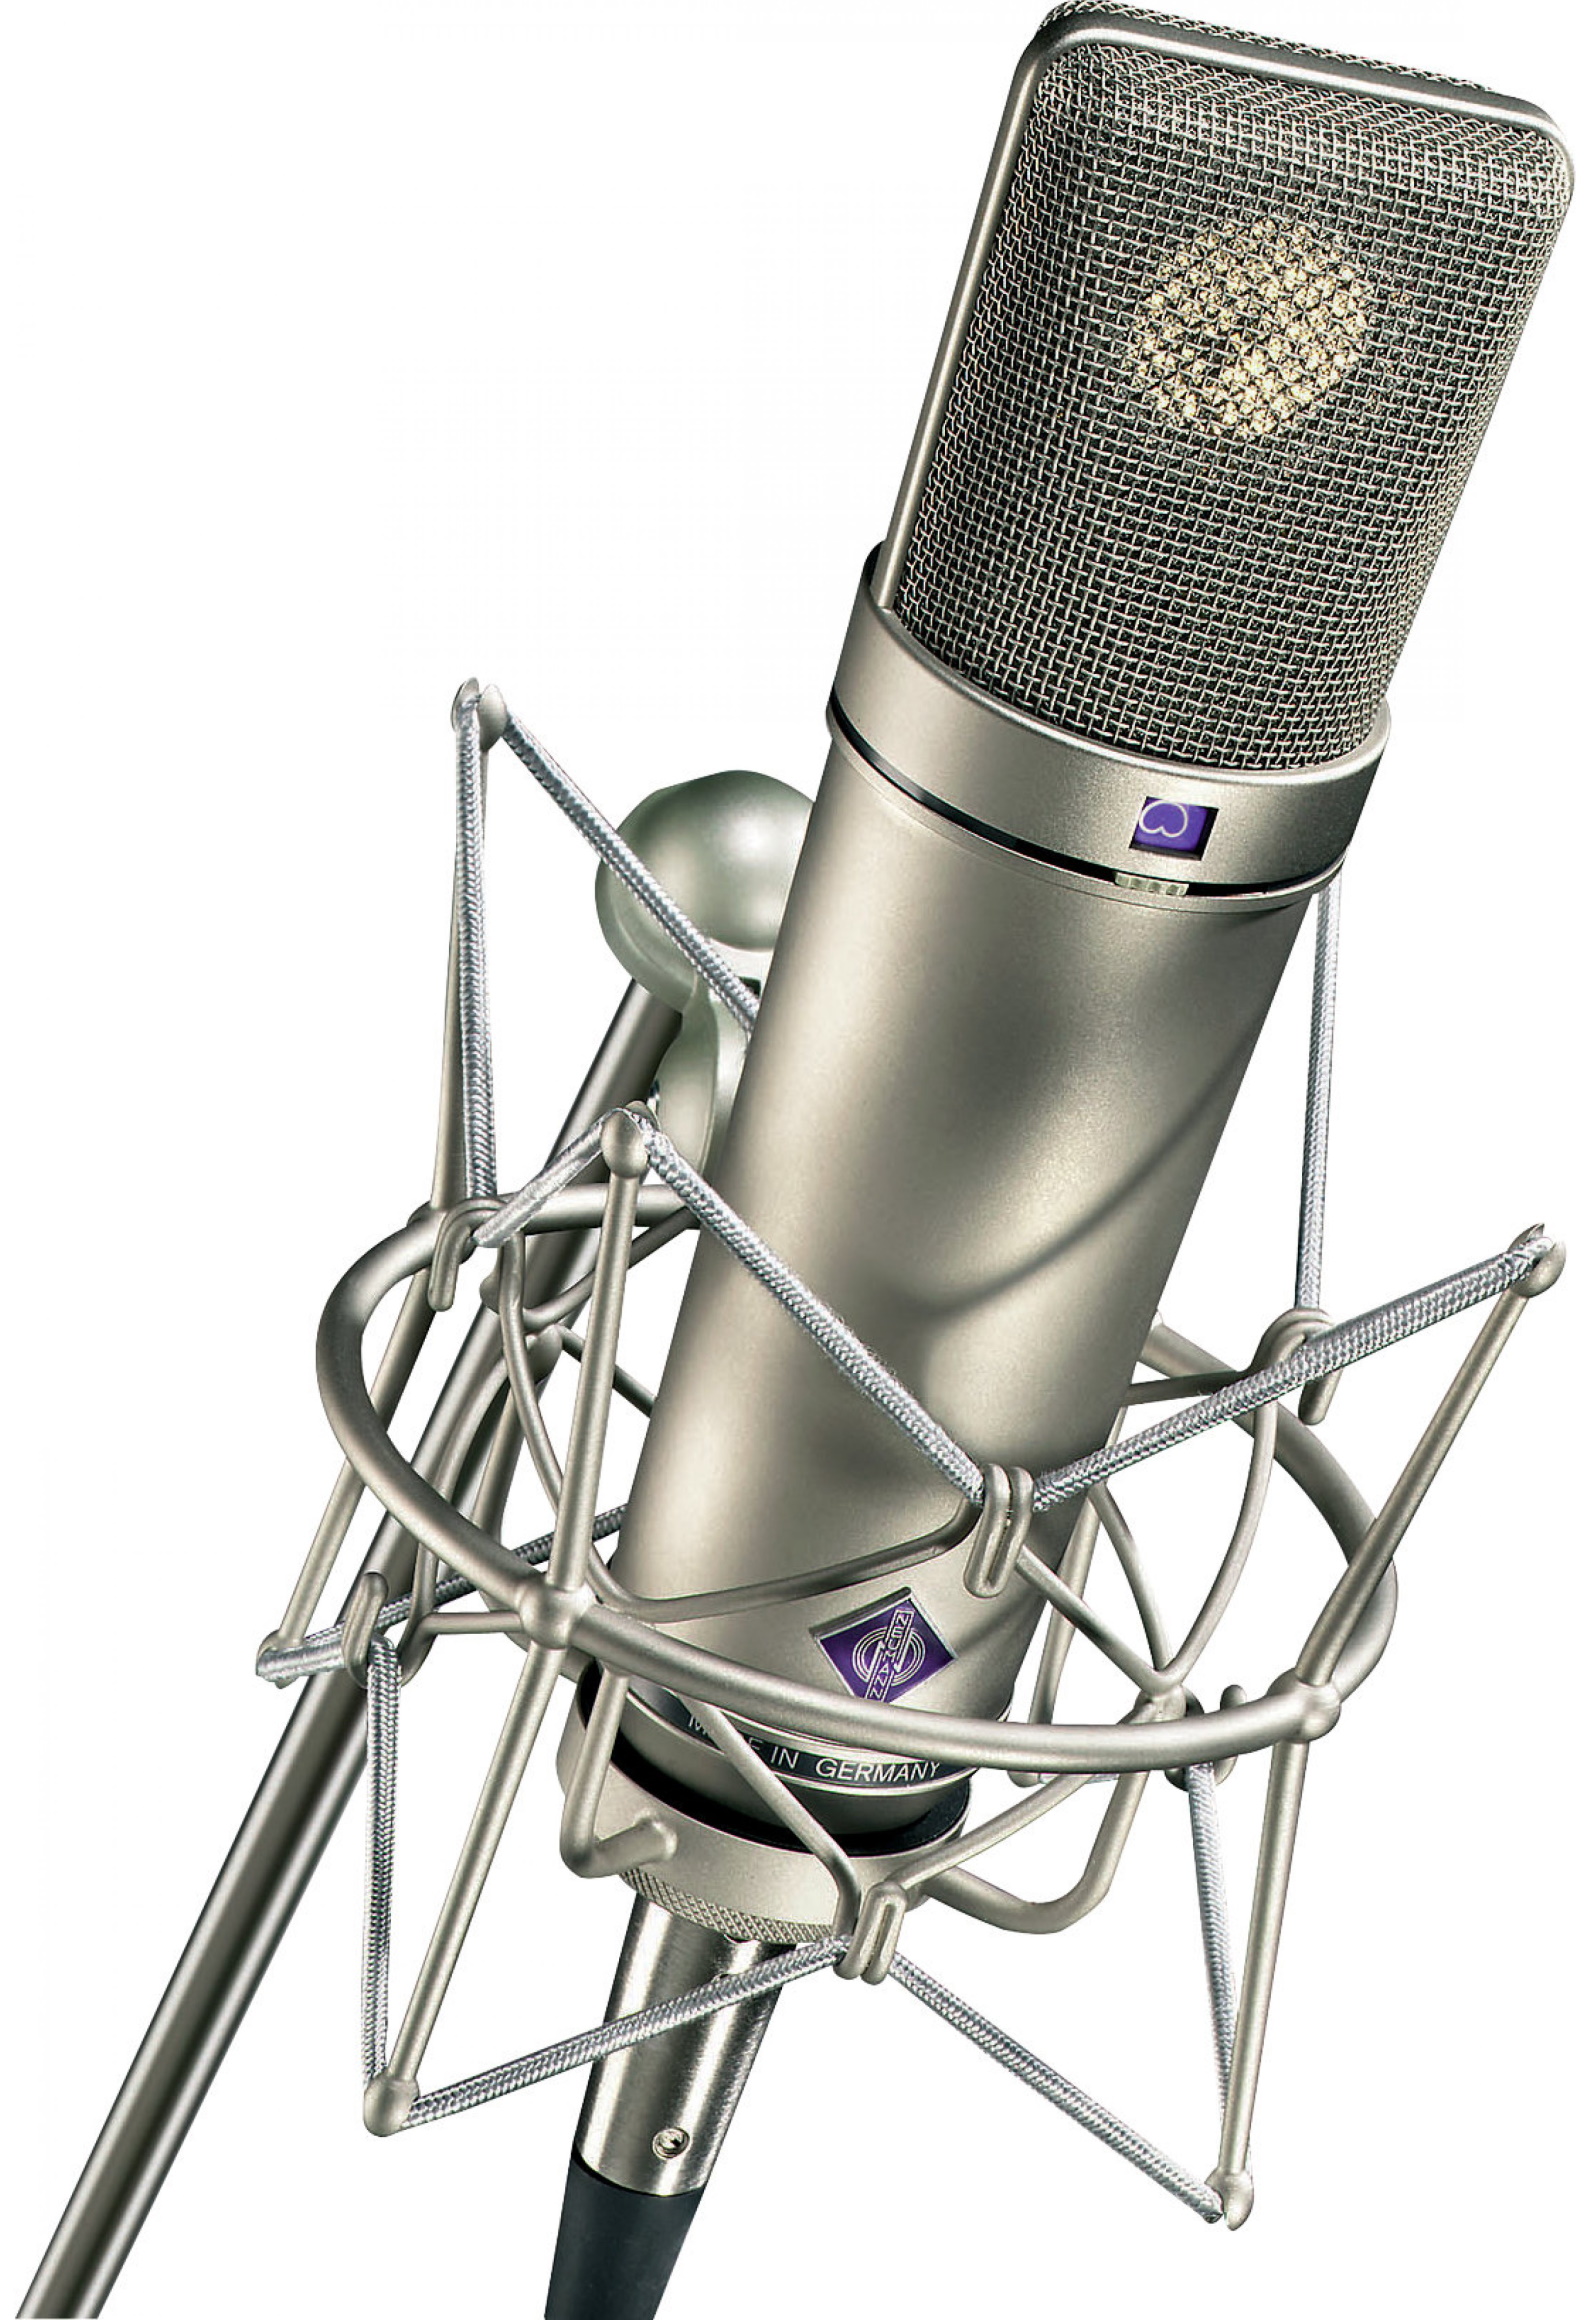 Neumann studio microphones